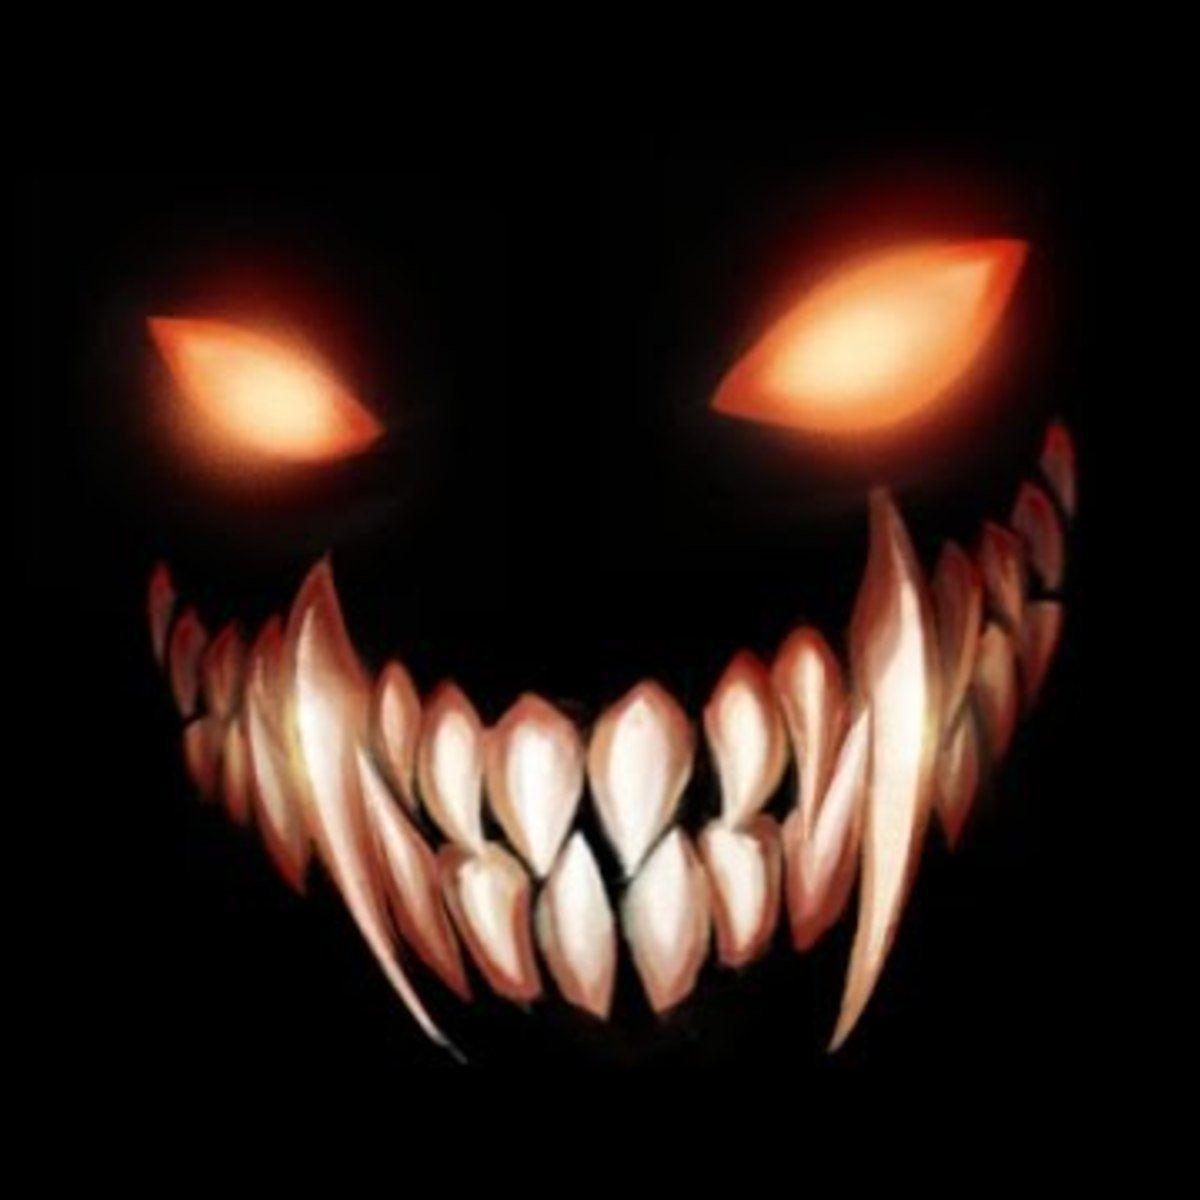 Дьявольская улыбка